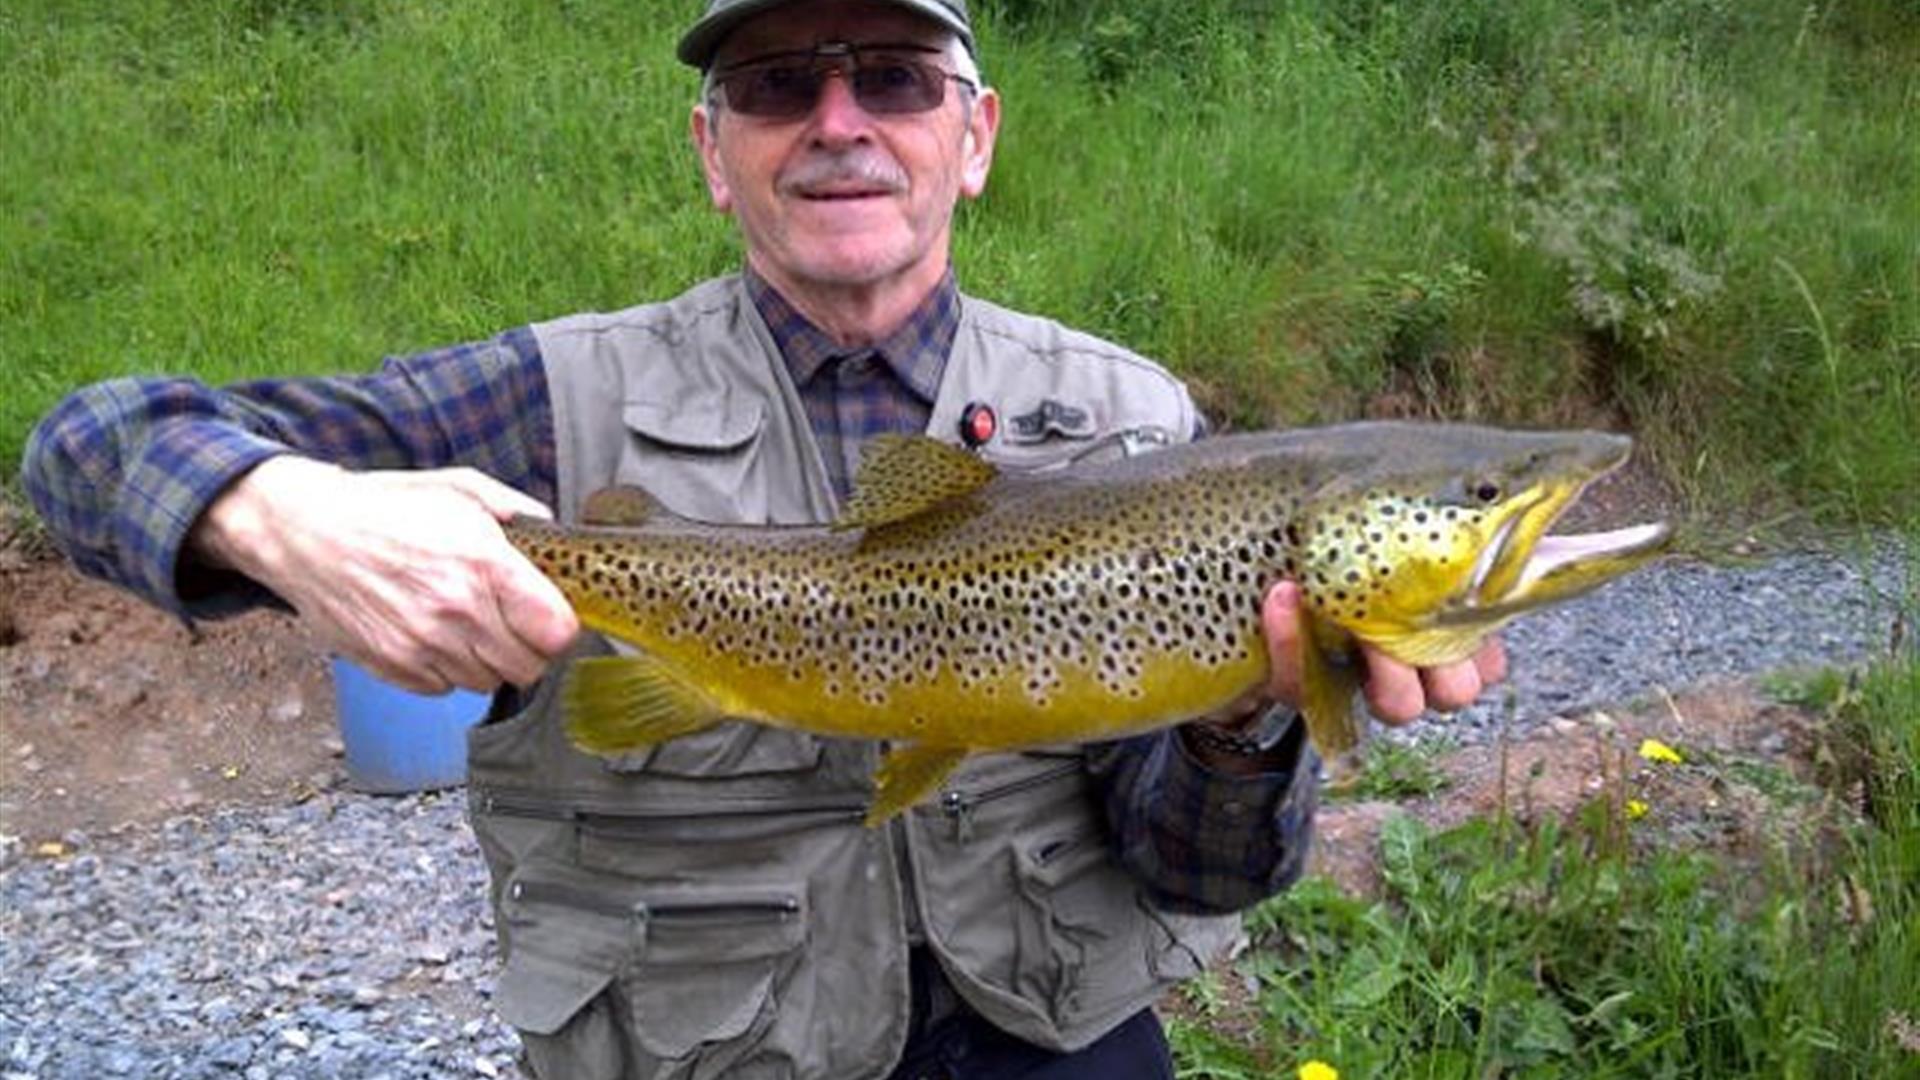 Genteman holding a large fish